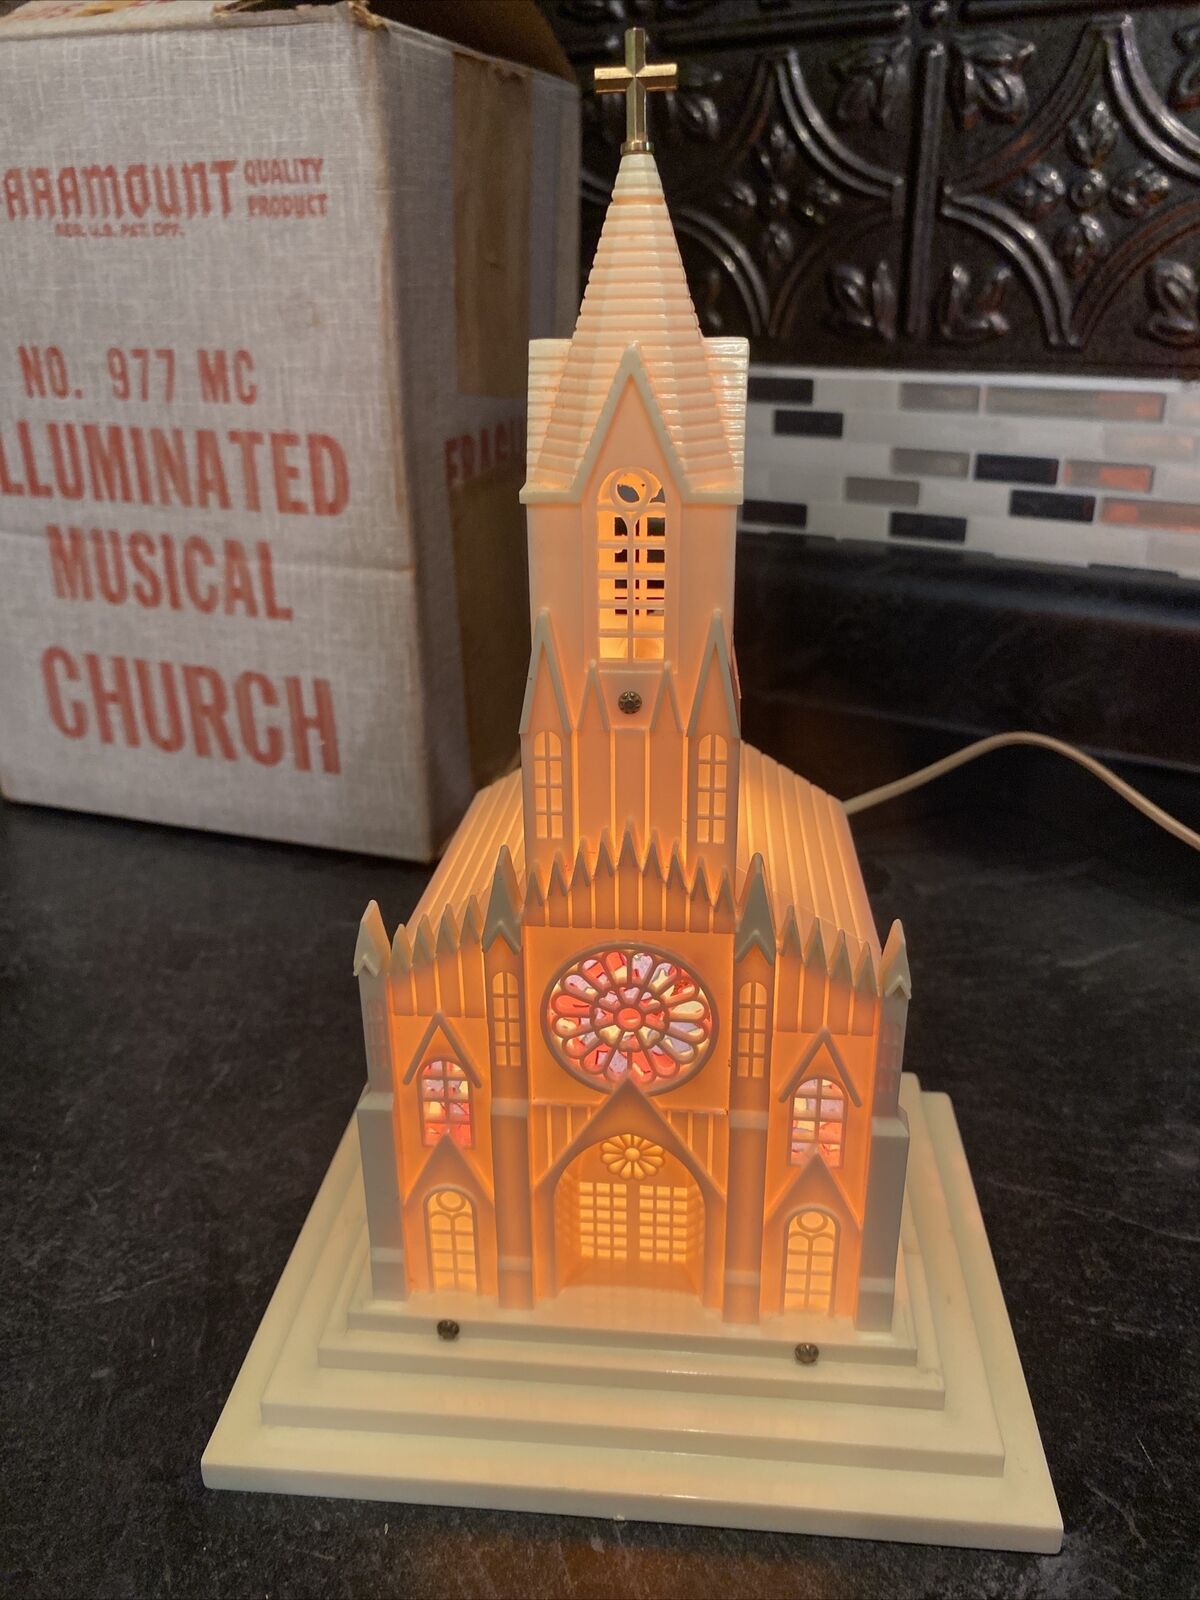 Vtg Paramount Illuminated Musical Church w Raylite Electric Light Works w Box